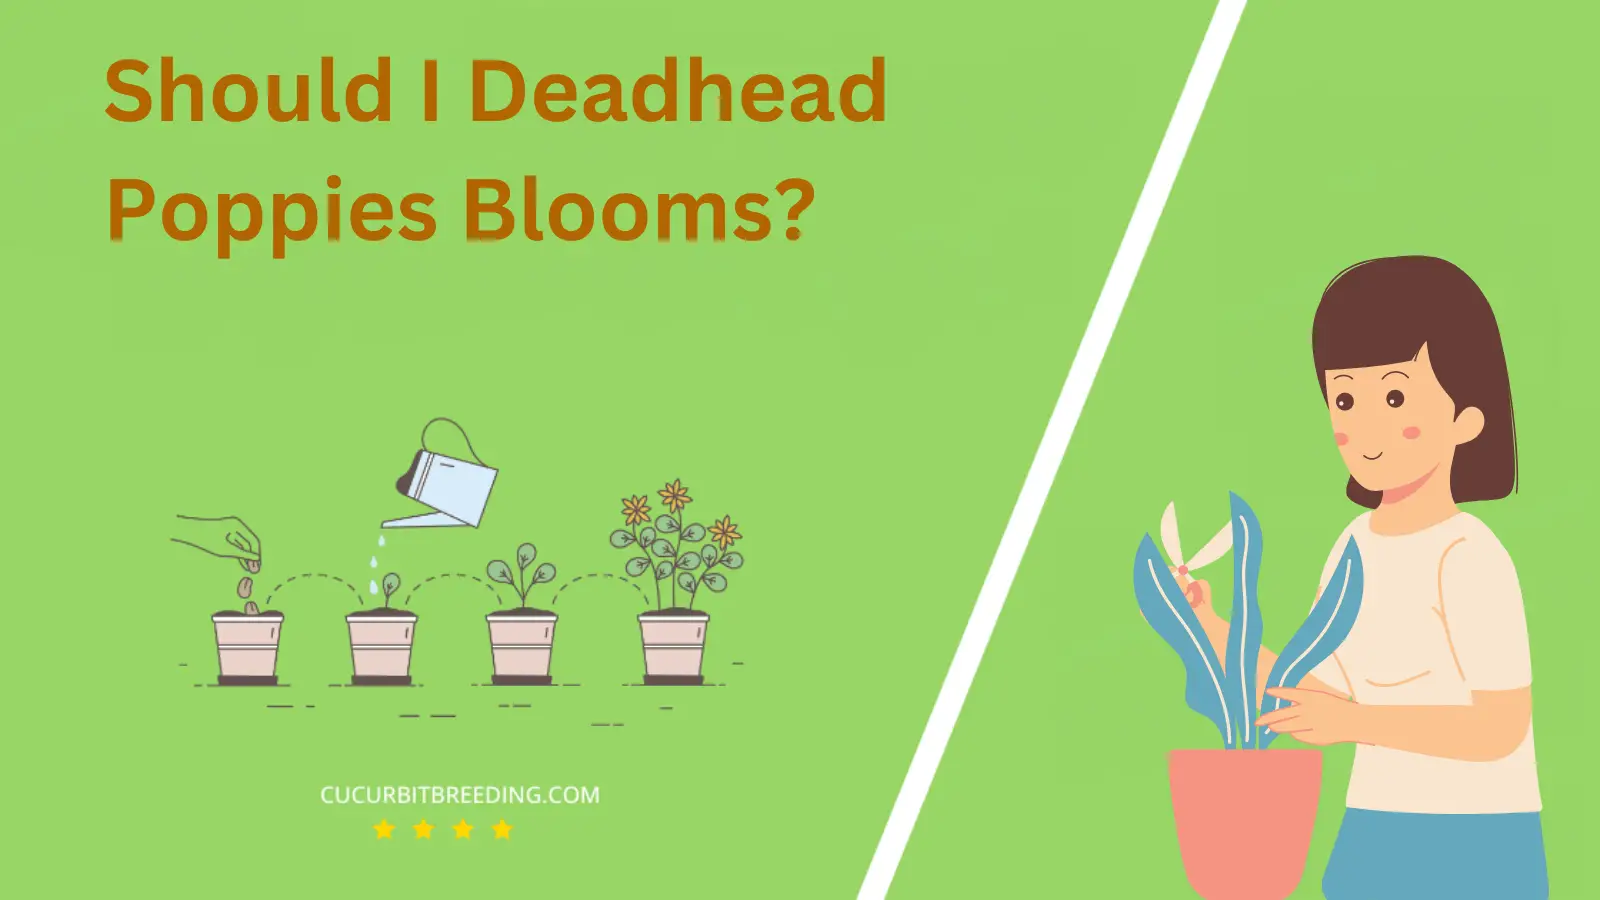 Should I Deadhead Poppies Blooms?